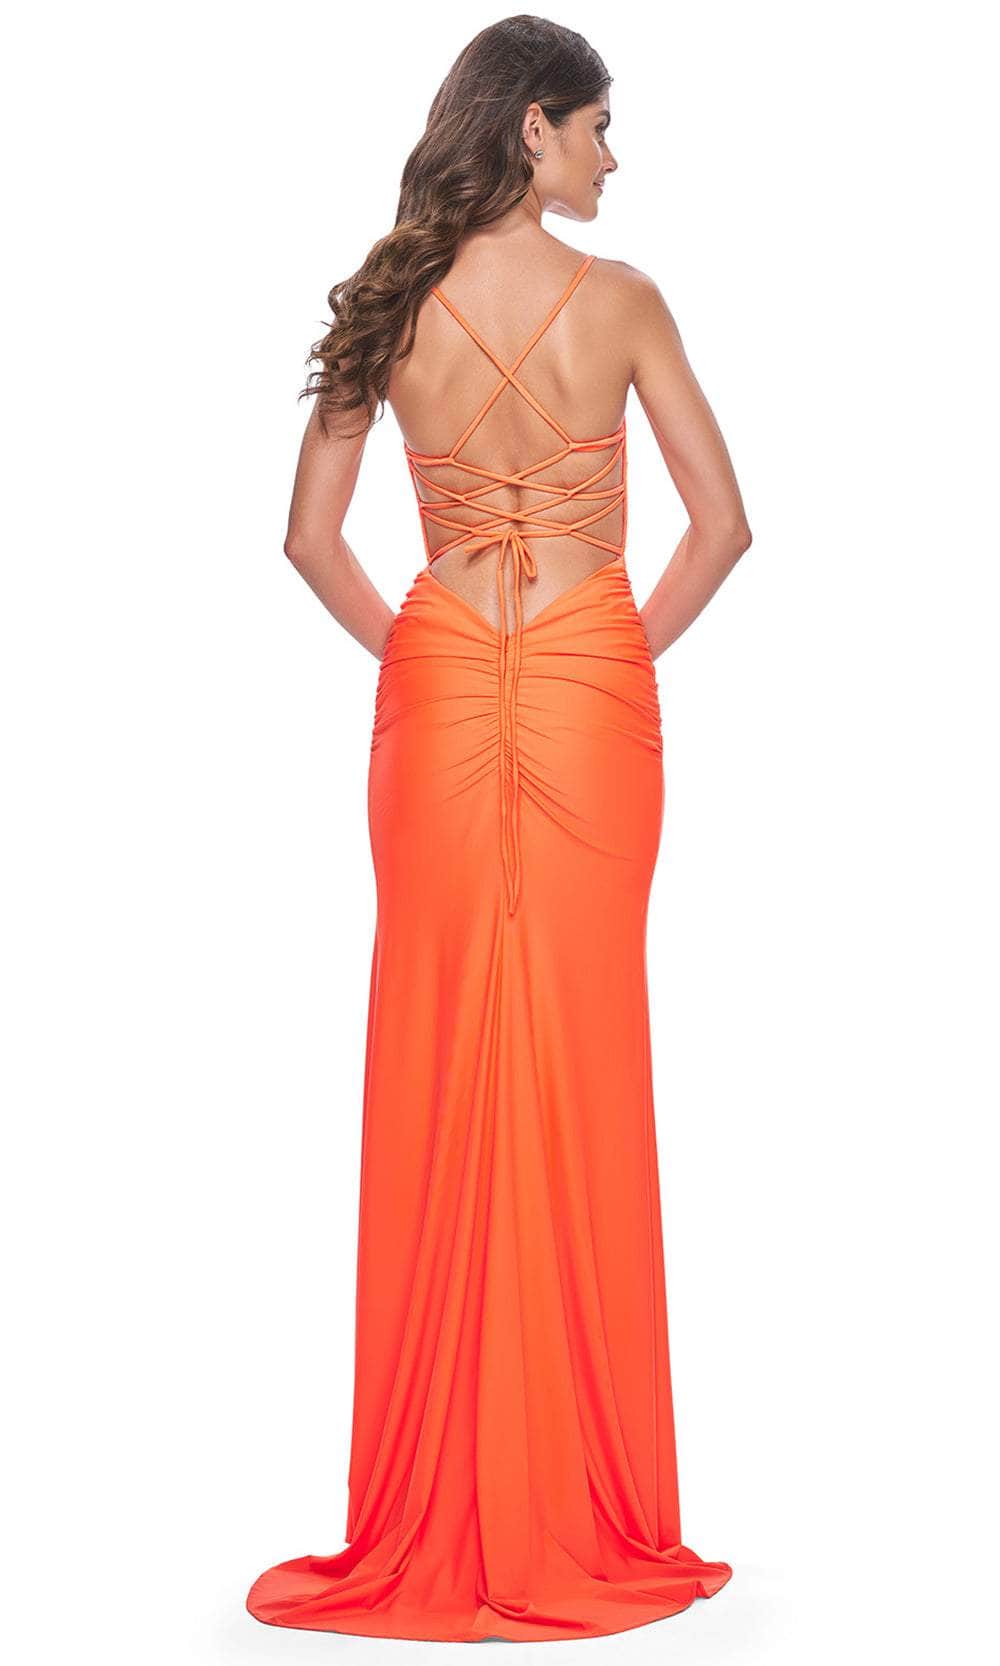 La Femme 32321 - Glitter Bodice Prom Dress Prom Dresses